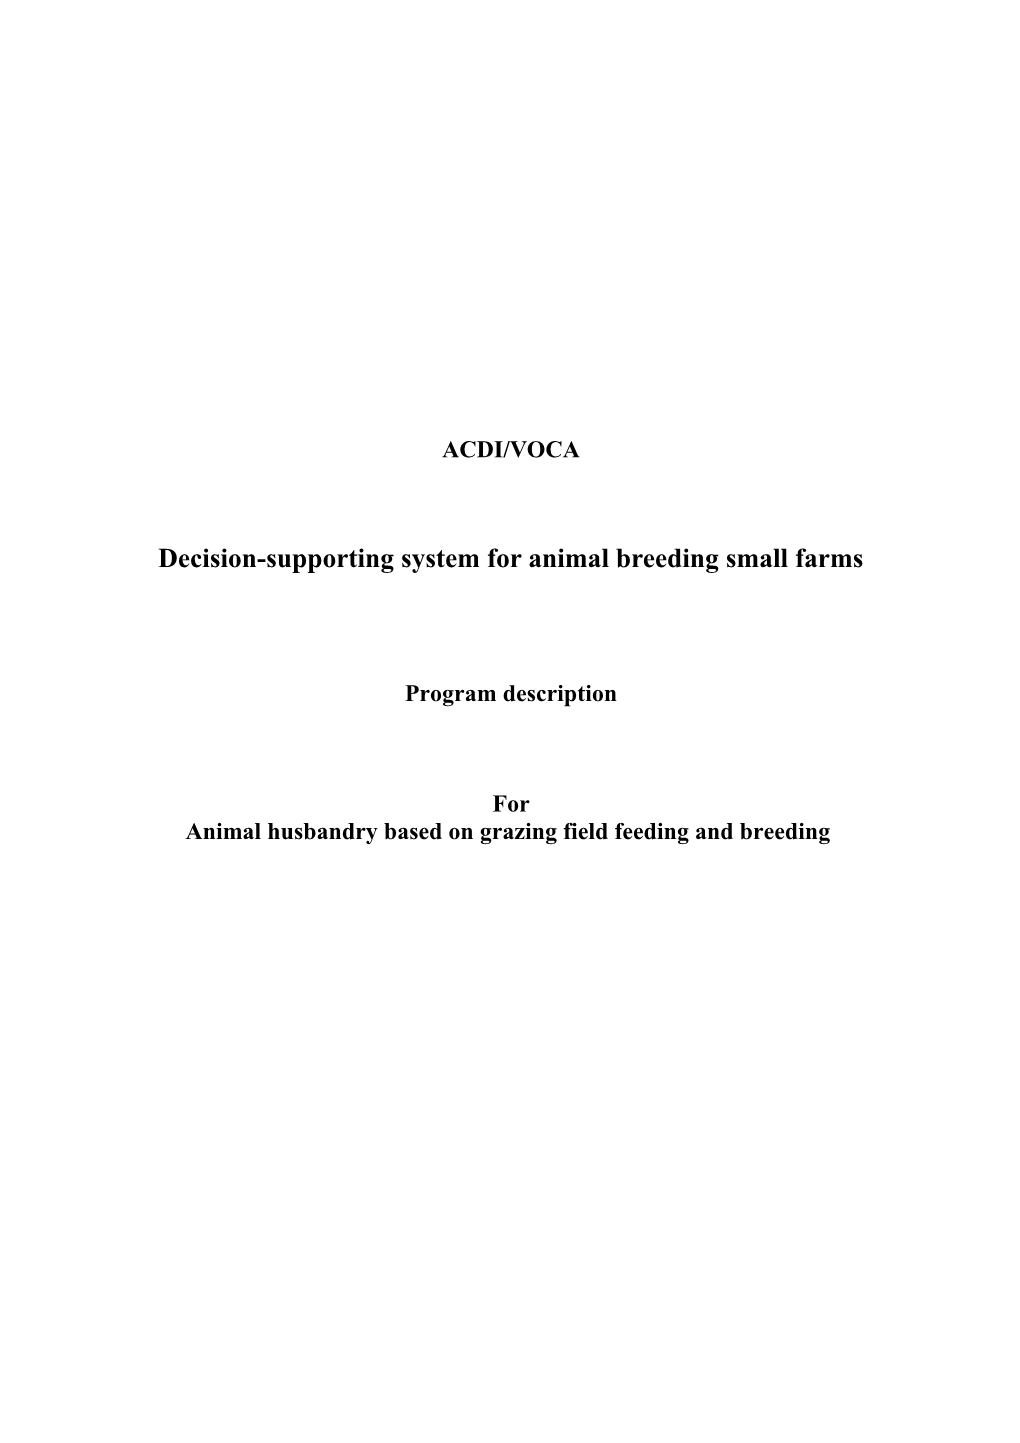 Description of the Software Program for Planning Livestock Operations